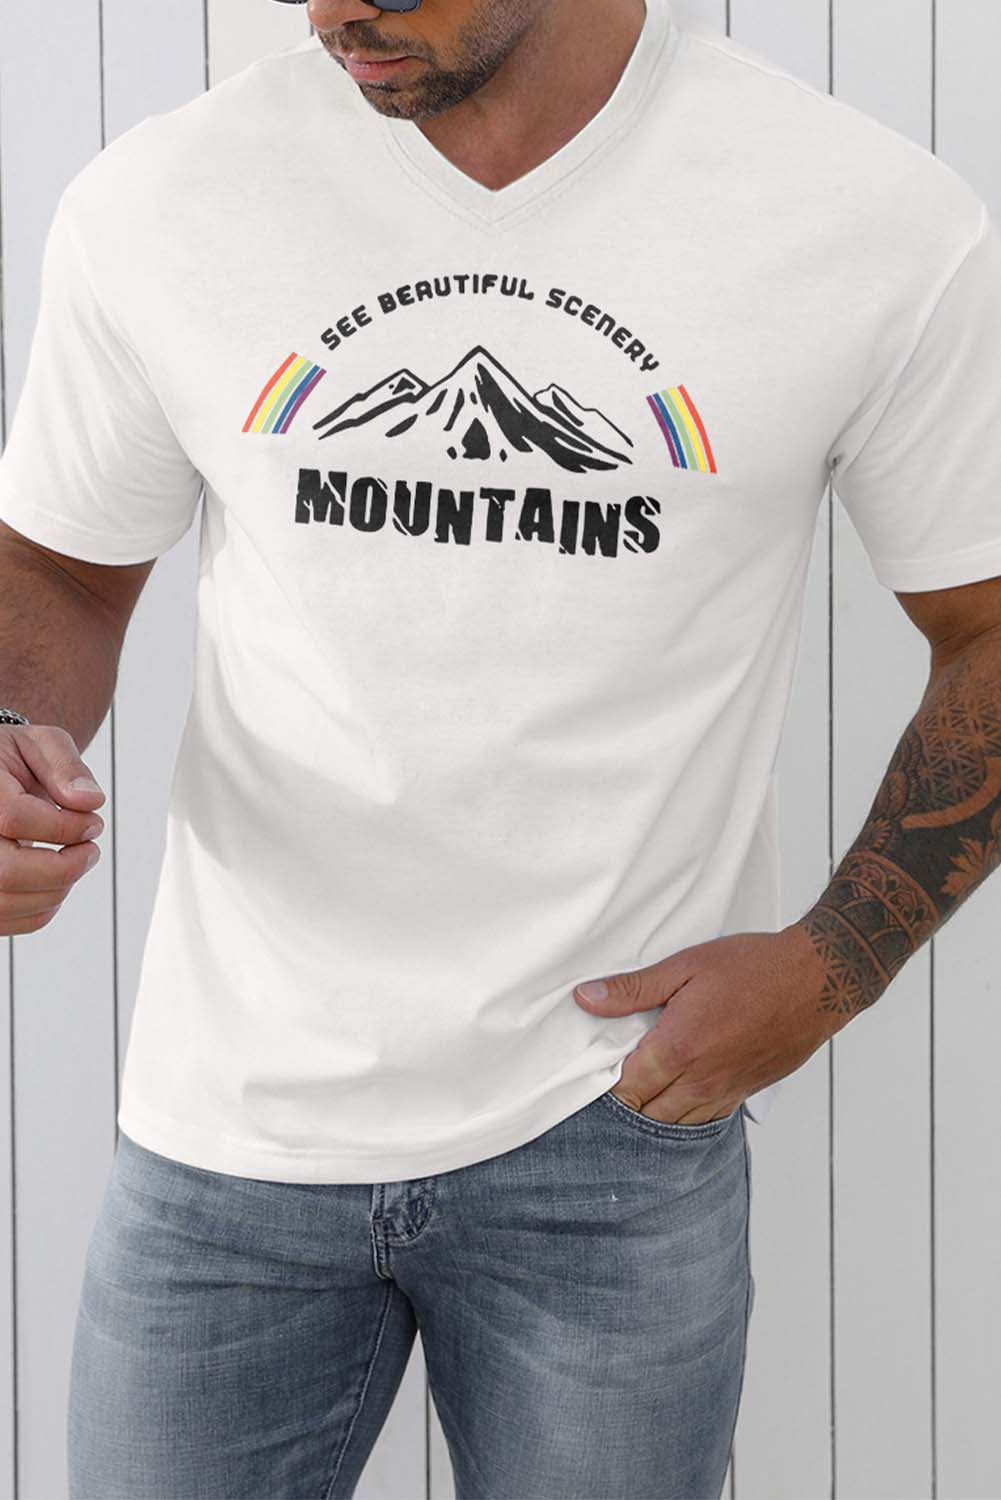 White See Beautiful Scenery Mountains Print T Shirt for Men White 65%Polyester+30%Cotton+5%Elastane Men's Tops JT's Designer Fashion